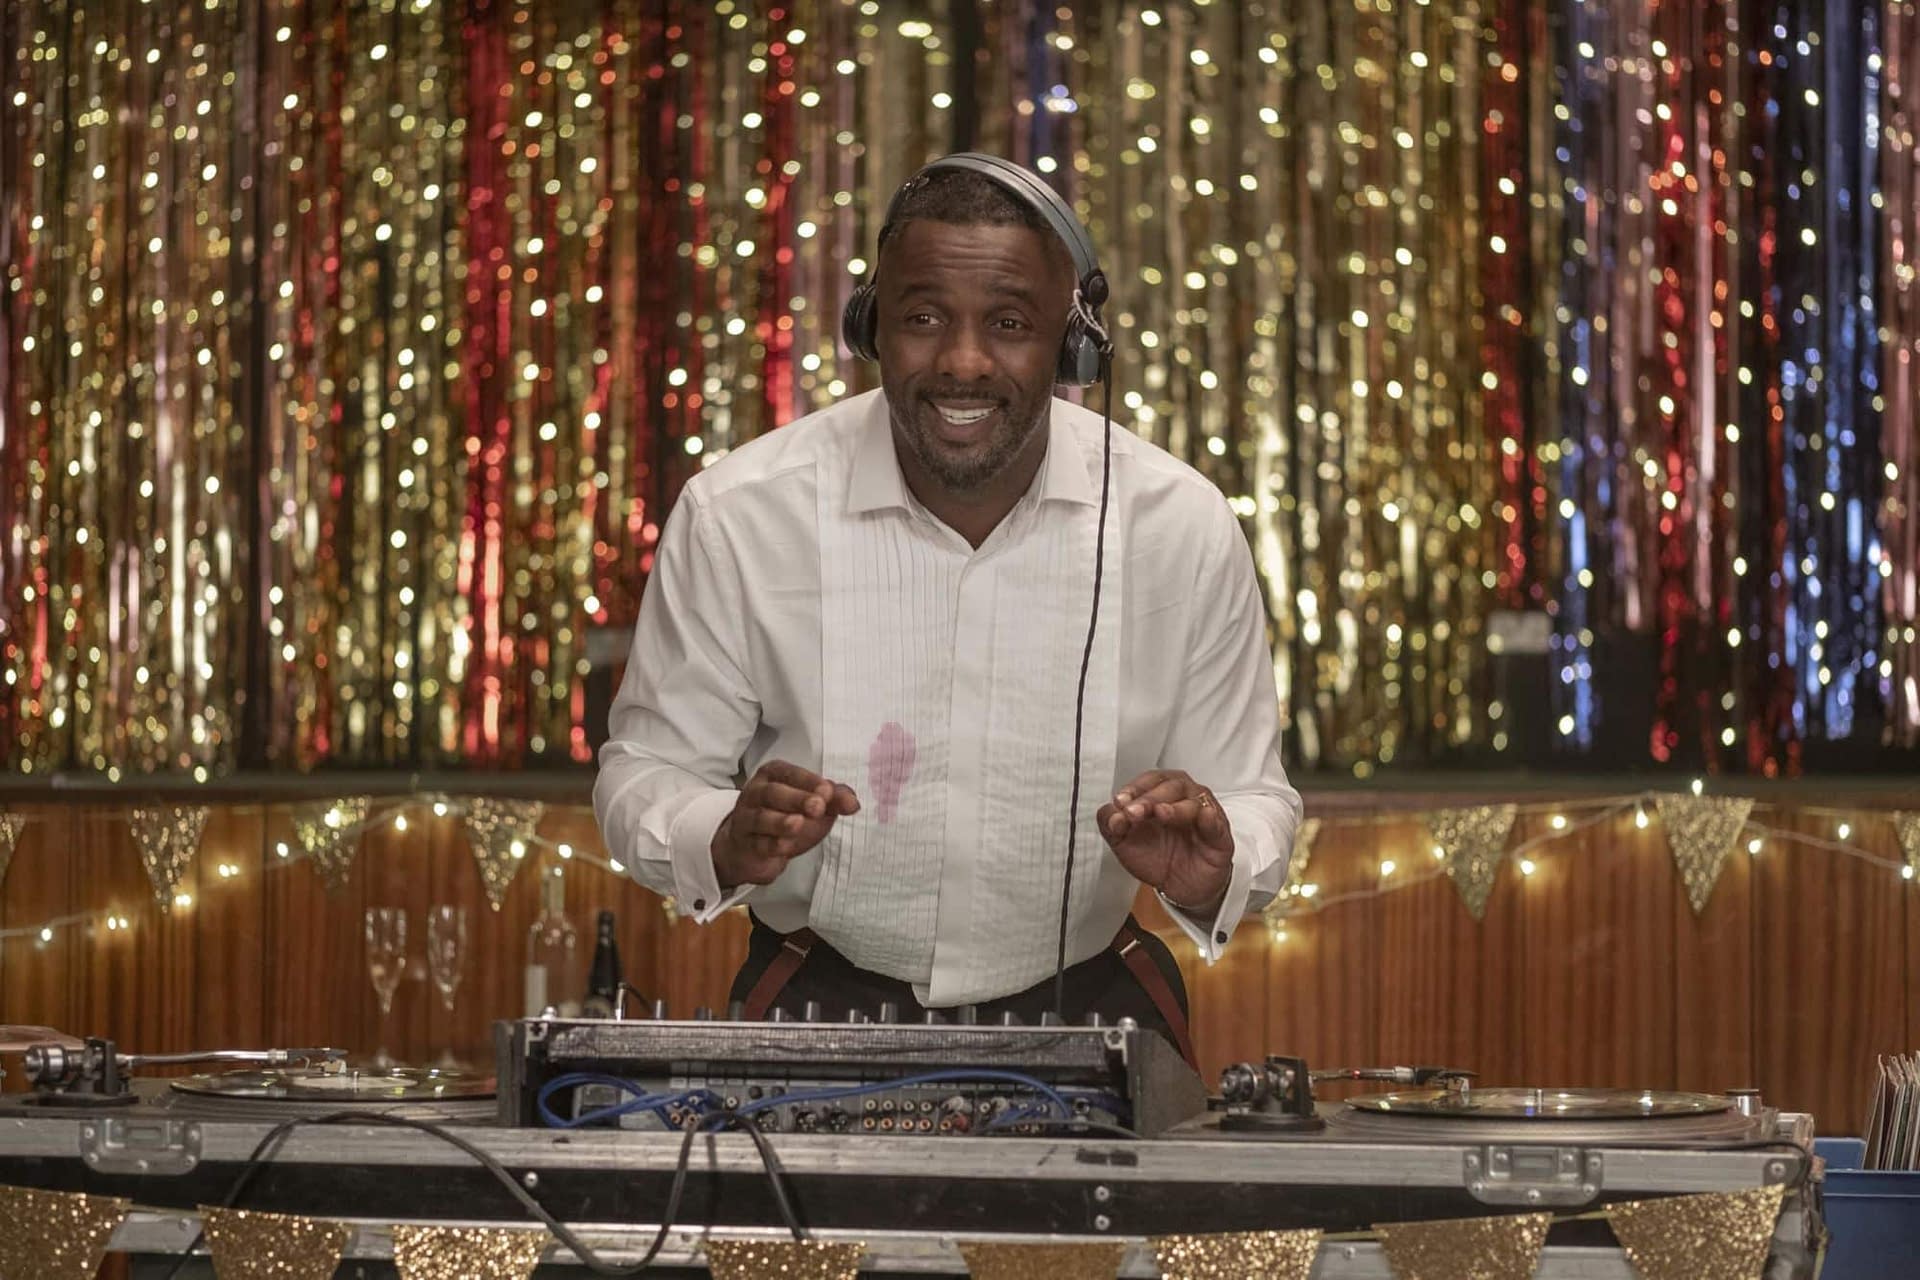 Turn Up Charlie: Idris Elba's DJ Comedy Series Gets First-Look Photos